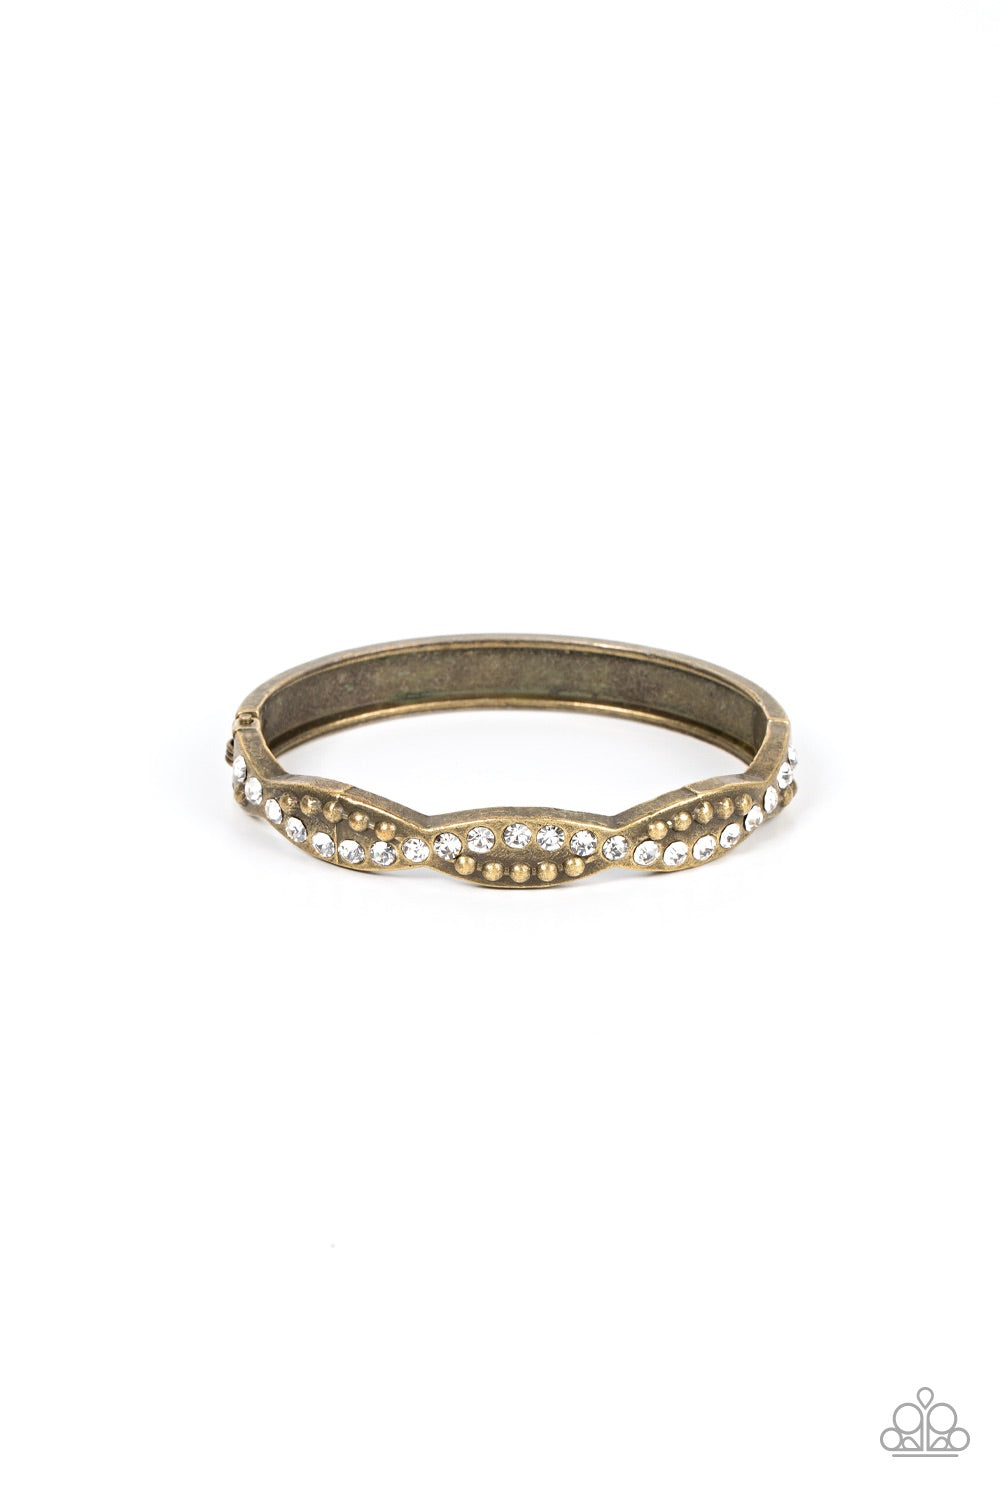 Paparazzi Empire Envy - Brass Bracelet - A Finishing Touch Jewelry